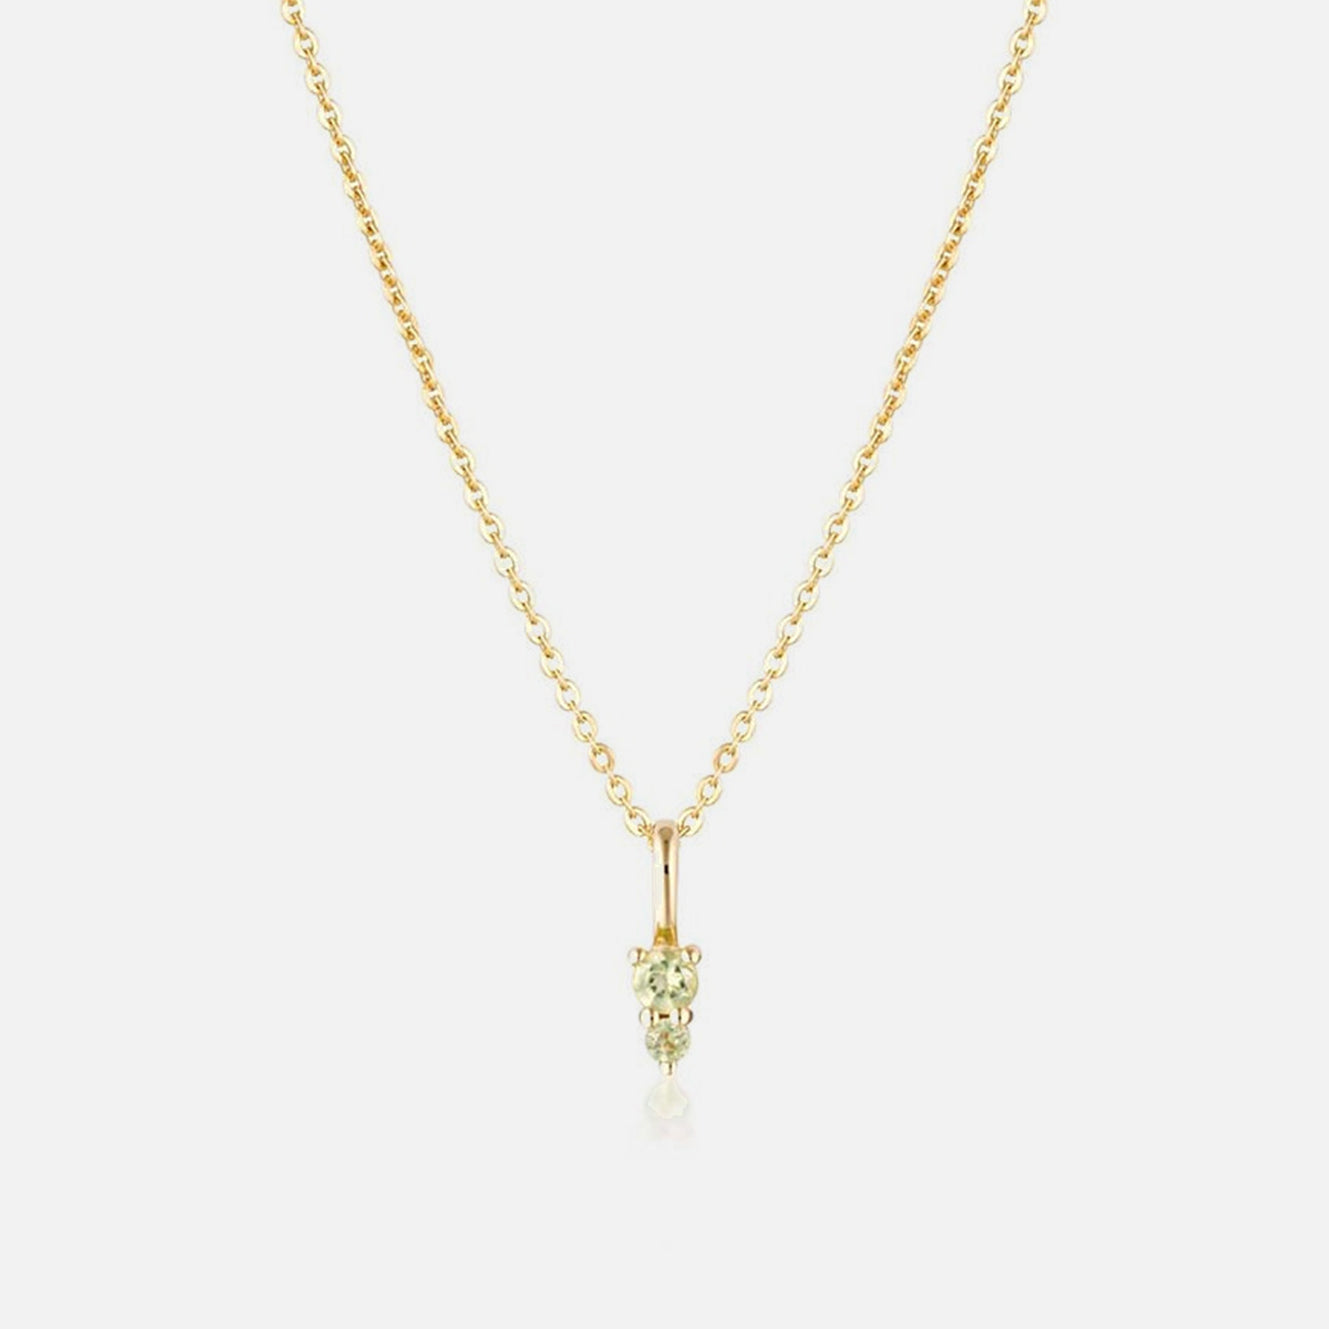 Linda Tahija - Binary Gemstone Necklace - Gold Plated - Peridot